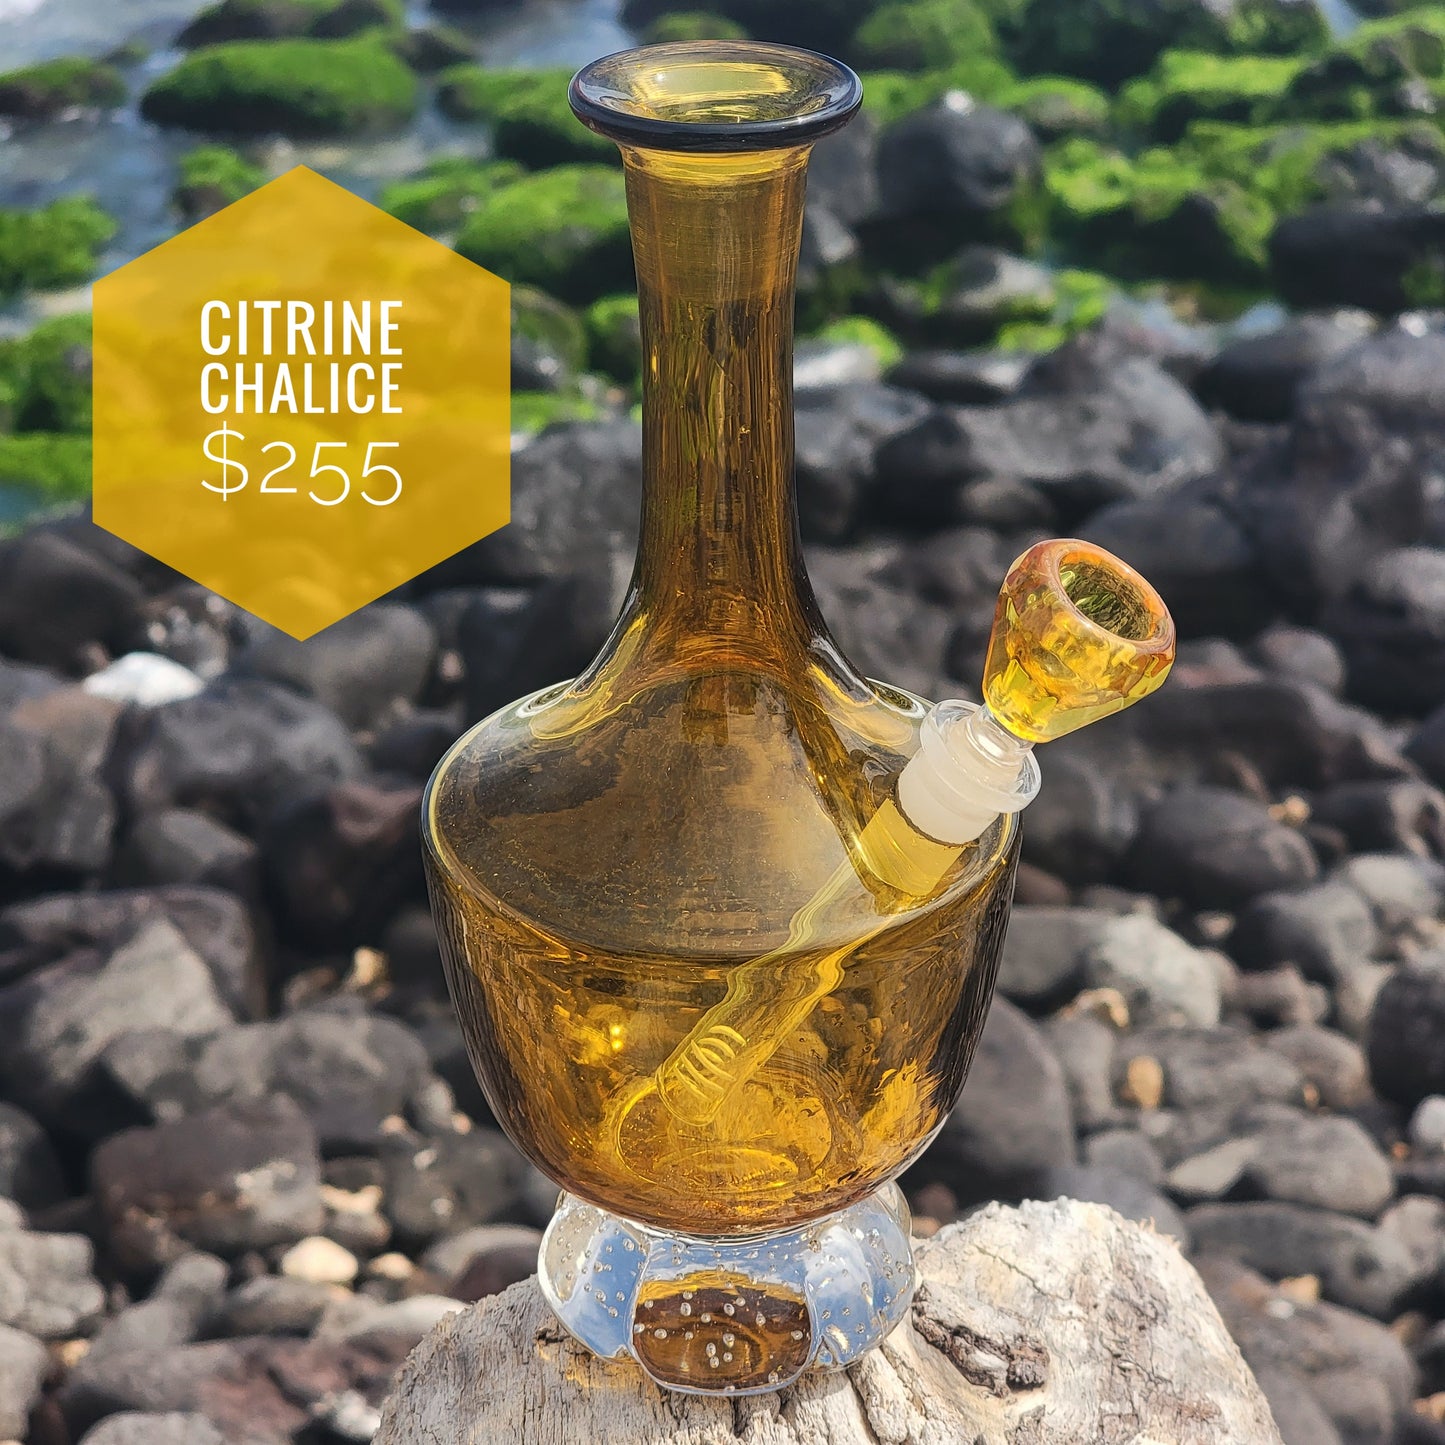 "Citrine Chalice" Vintage Upcycled Handblown Glass Vase Bong